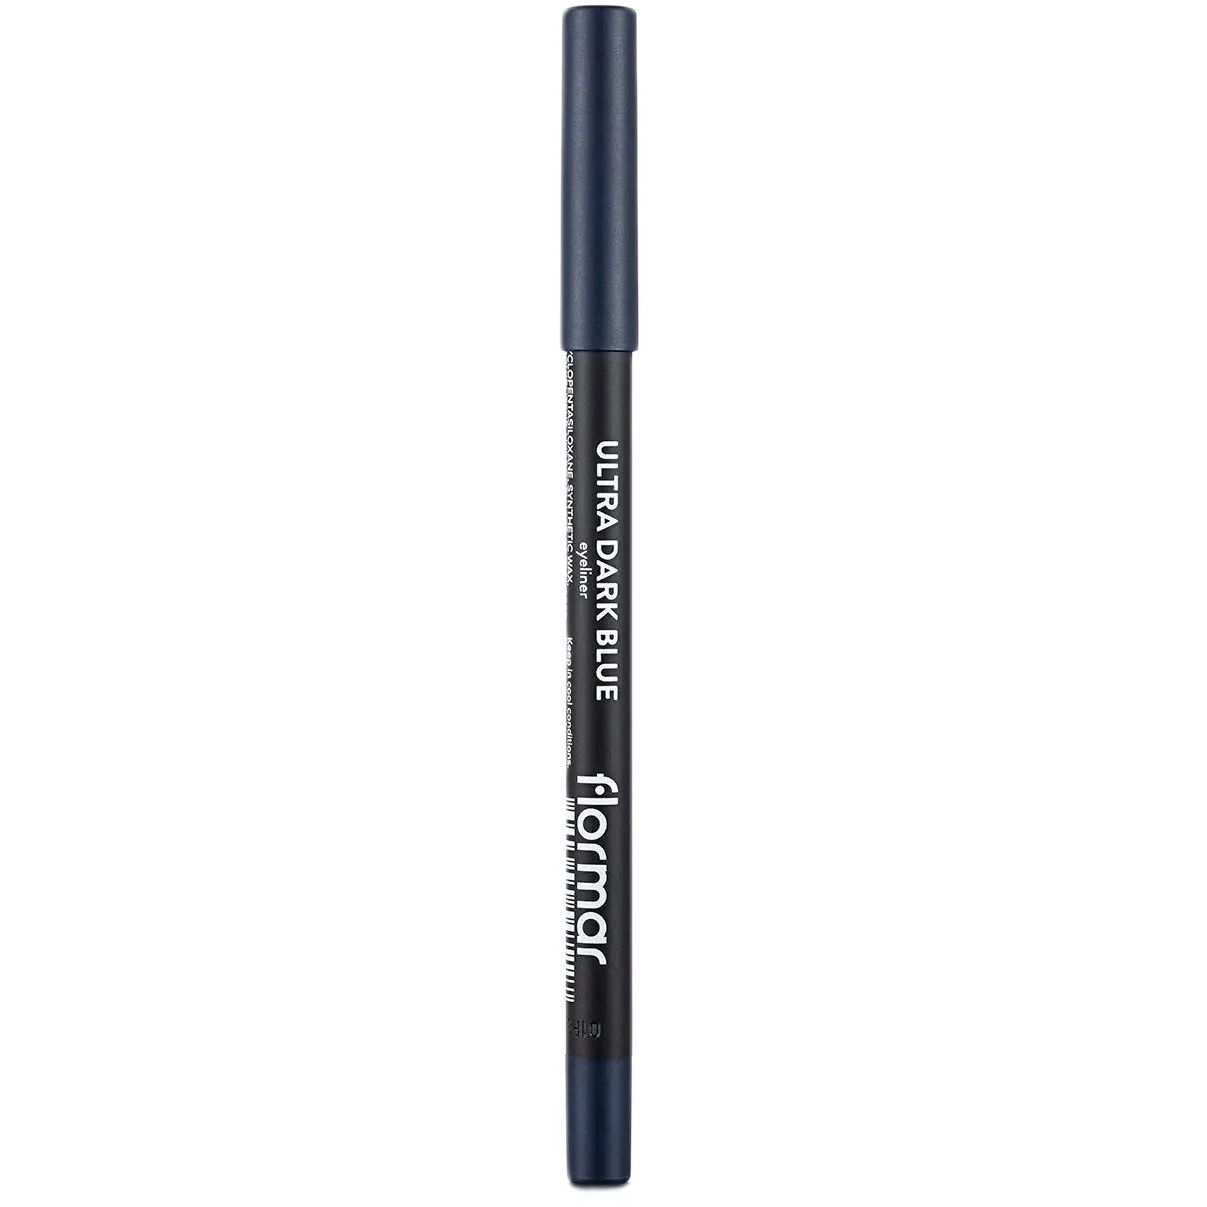 Олівець для очей Flormar Ultra Eyeliner відтінок 018 (Dark Blue) 1.14 г - фото 2